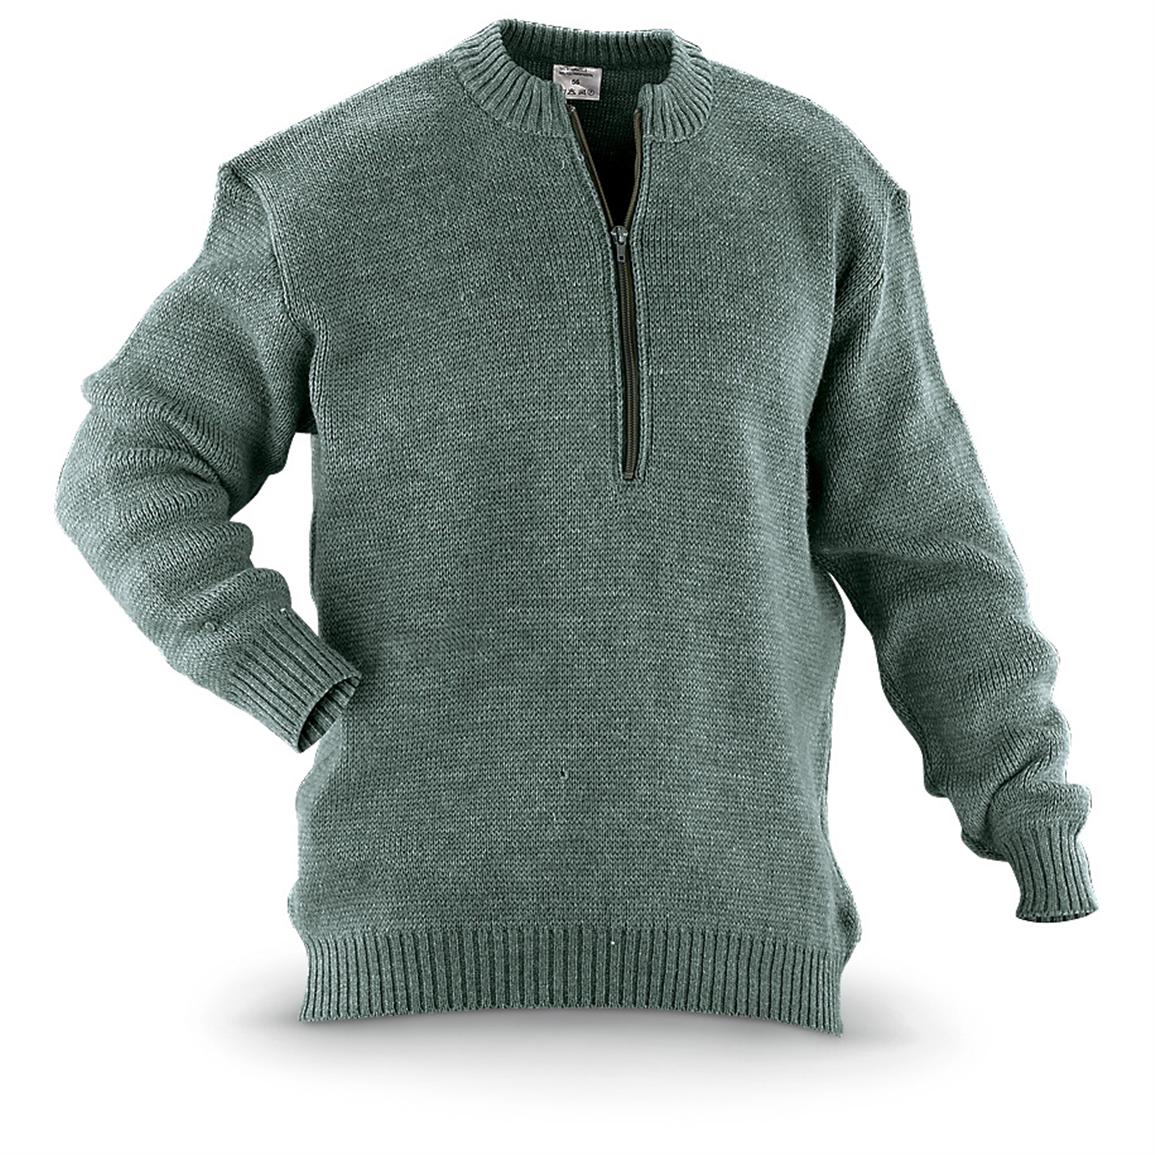 OEM uniform supplier offers high quality zipper mens knitting military uniform